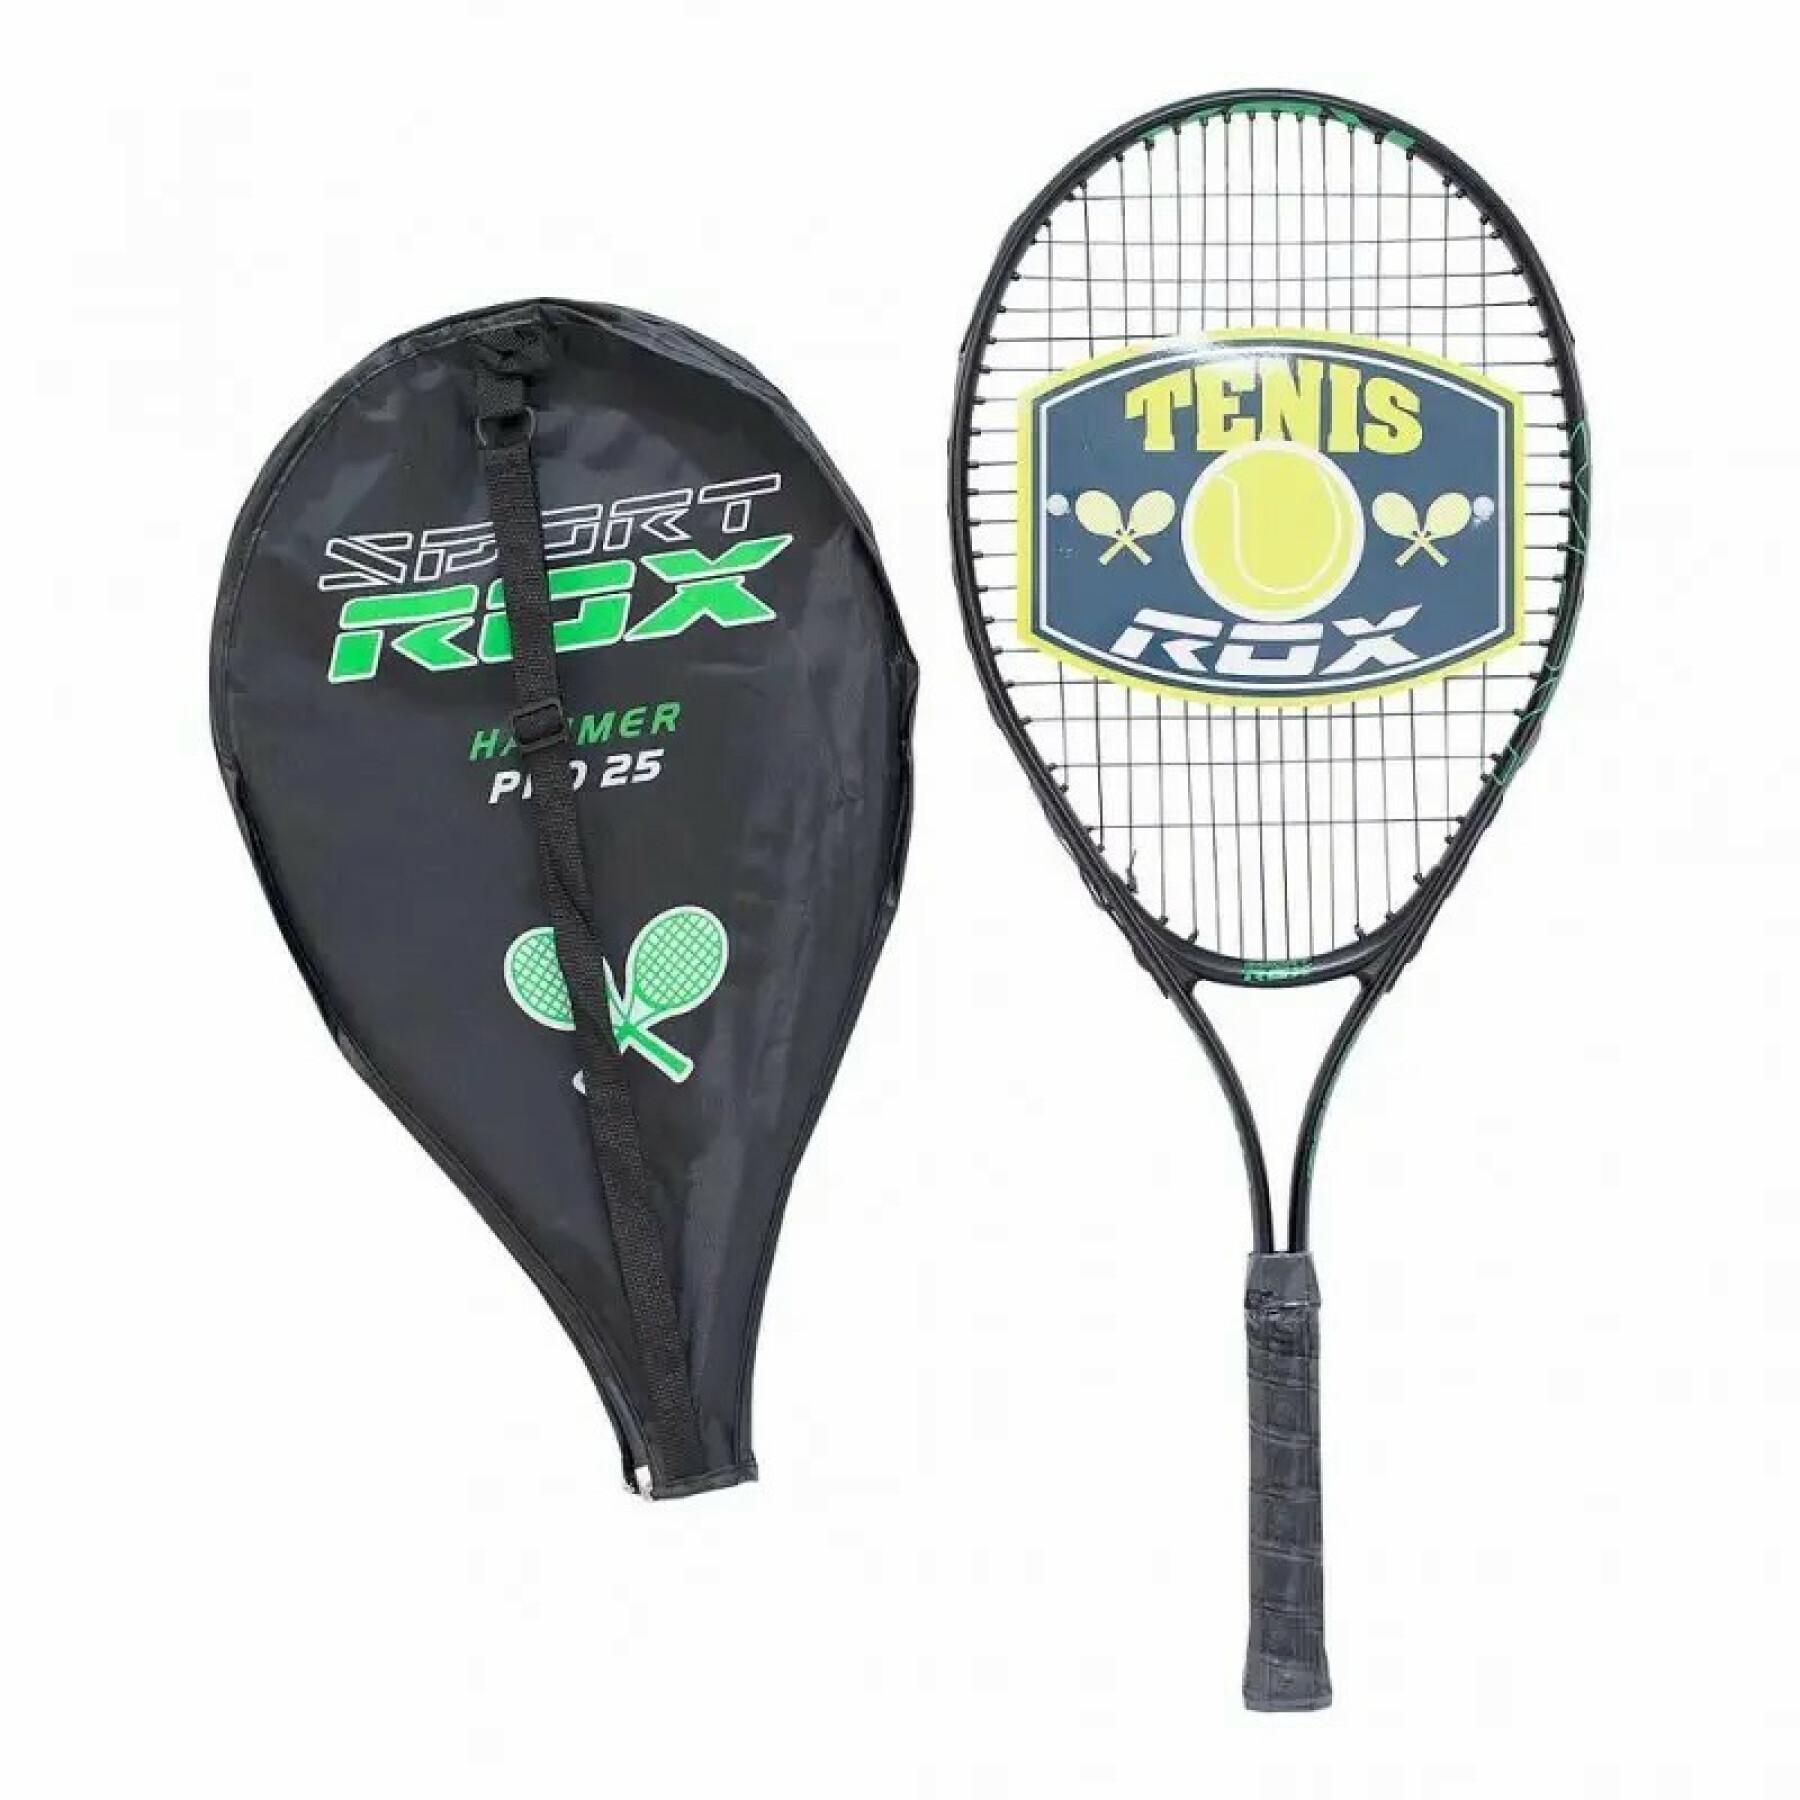 Tennis racket Softee Rox Hammer Pro 25